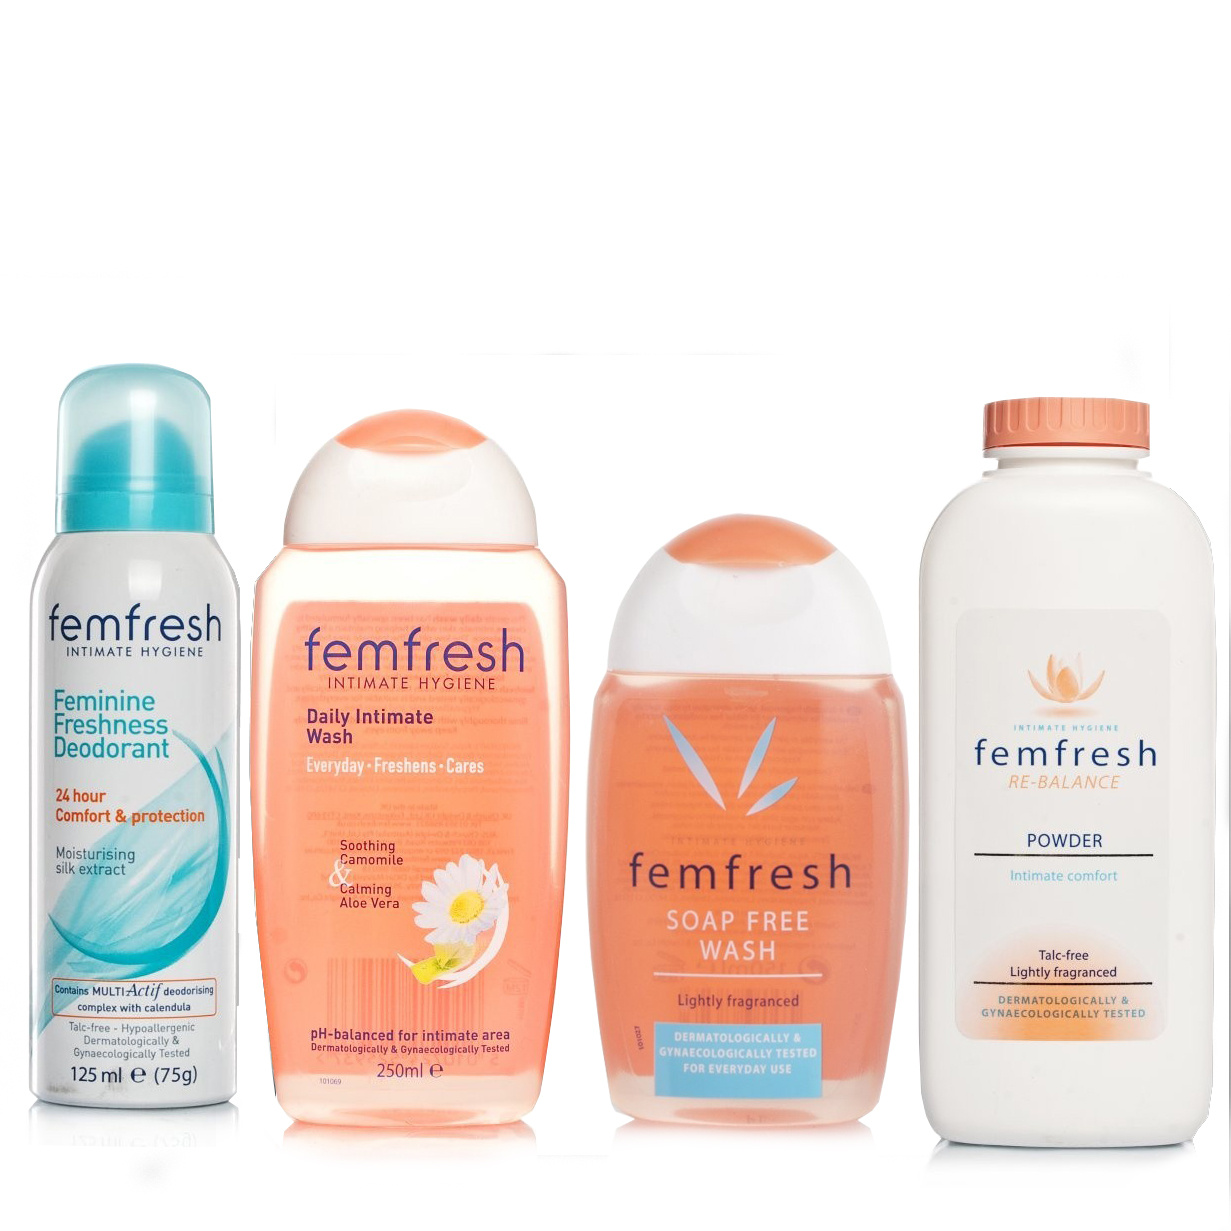 Intimate перевод. Feminine freshness от Femfresh. Daily intimate Wash жидкое. Кондиционер Hygiene Fresh. Himalaya intimate Wash.